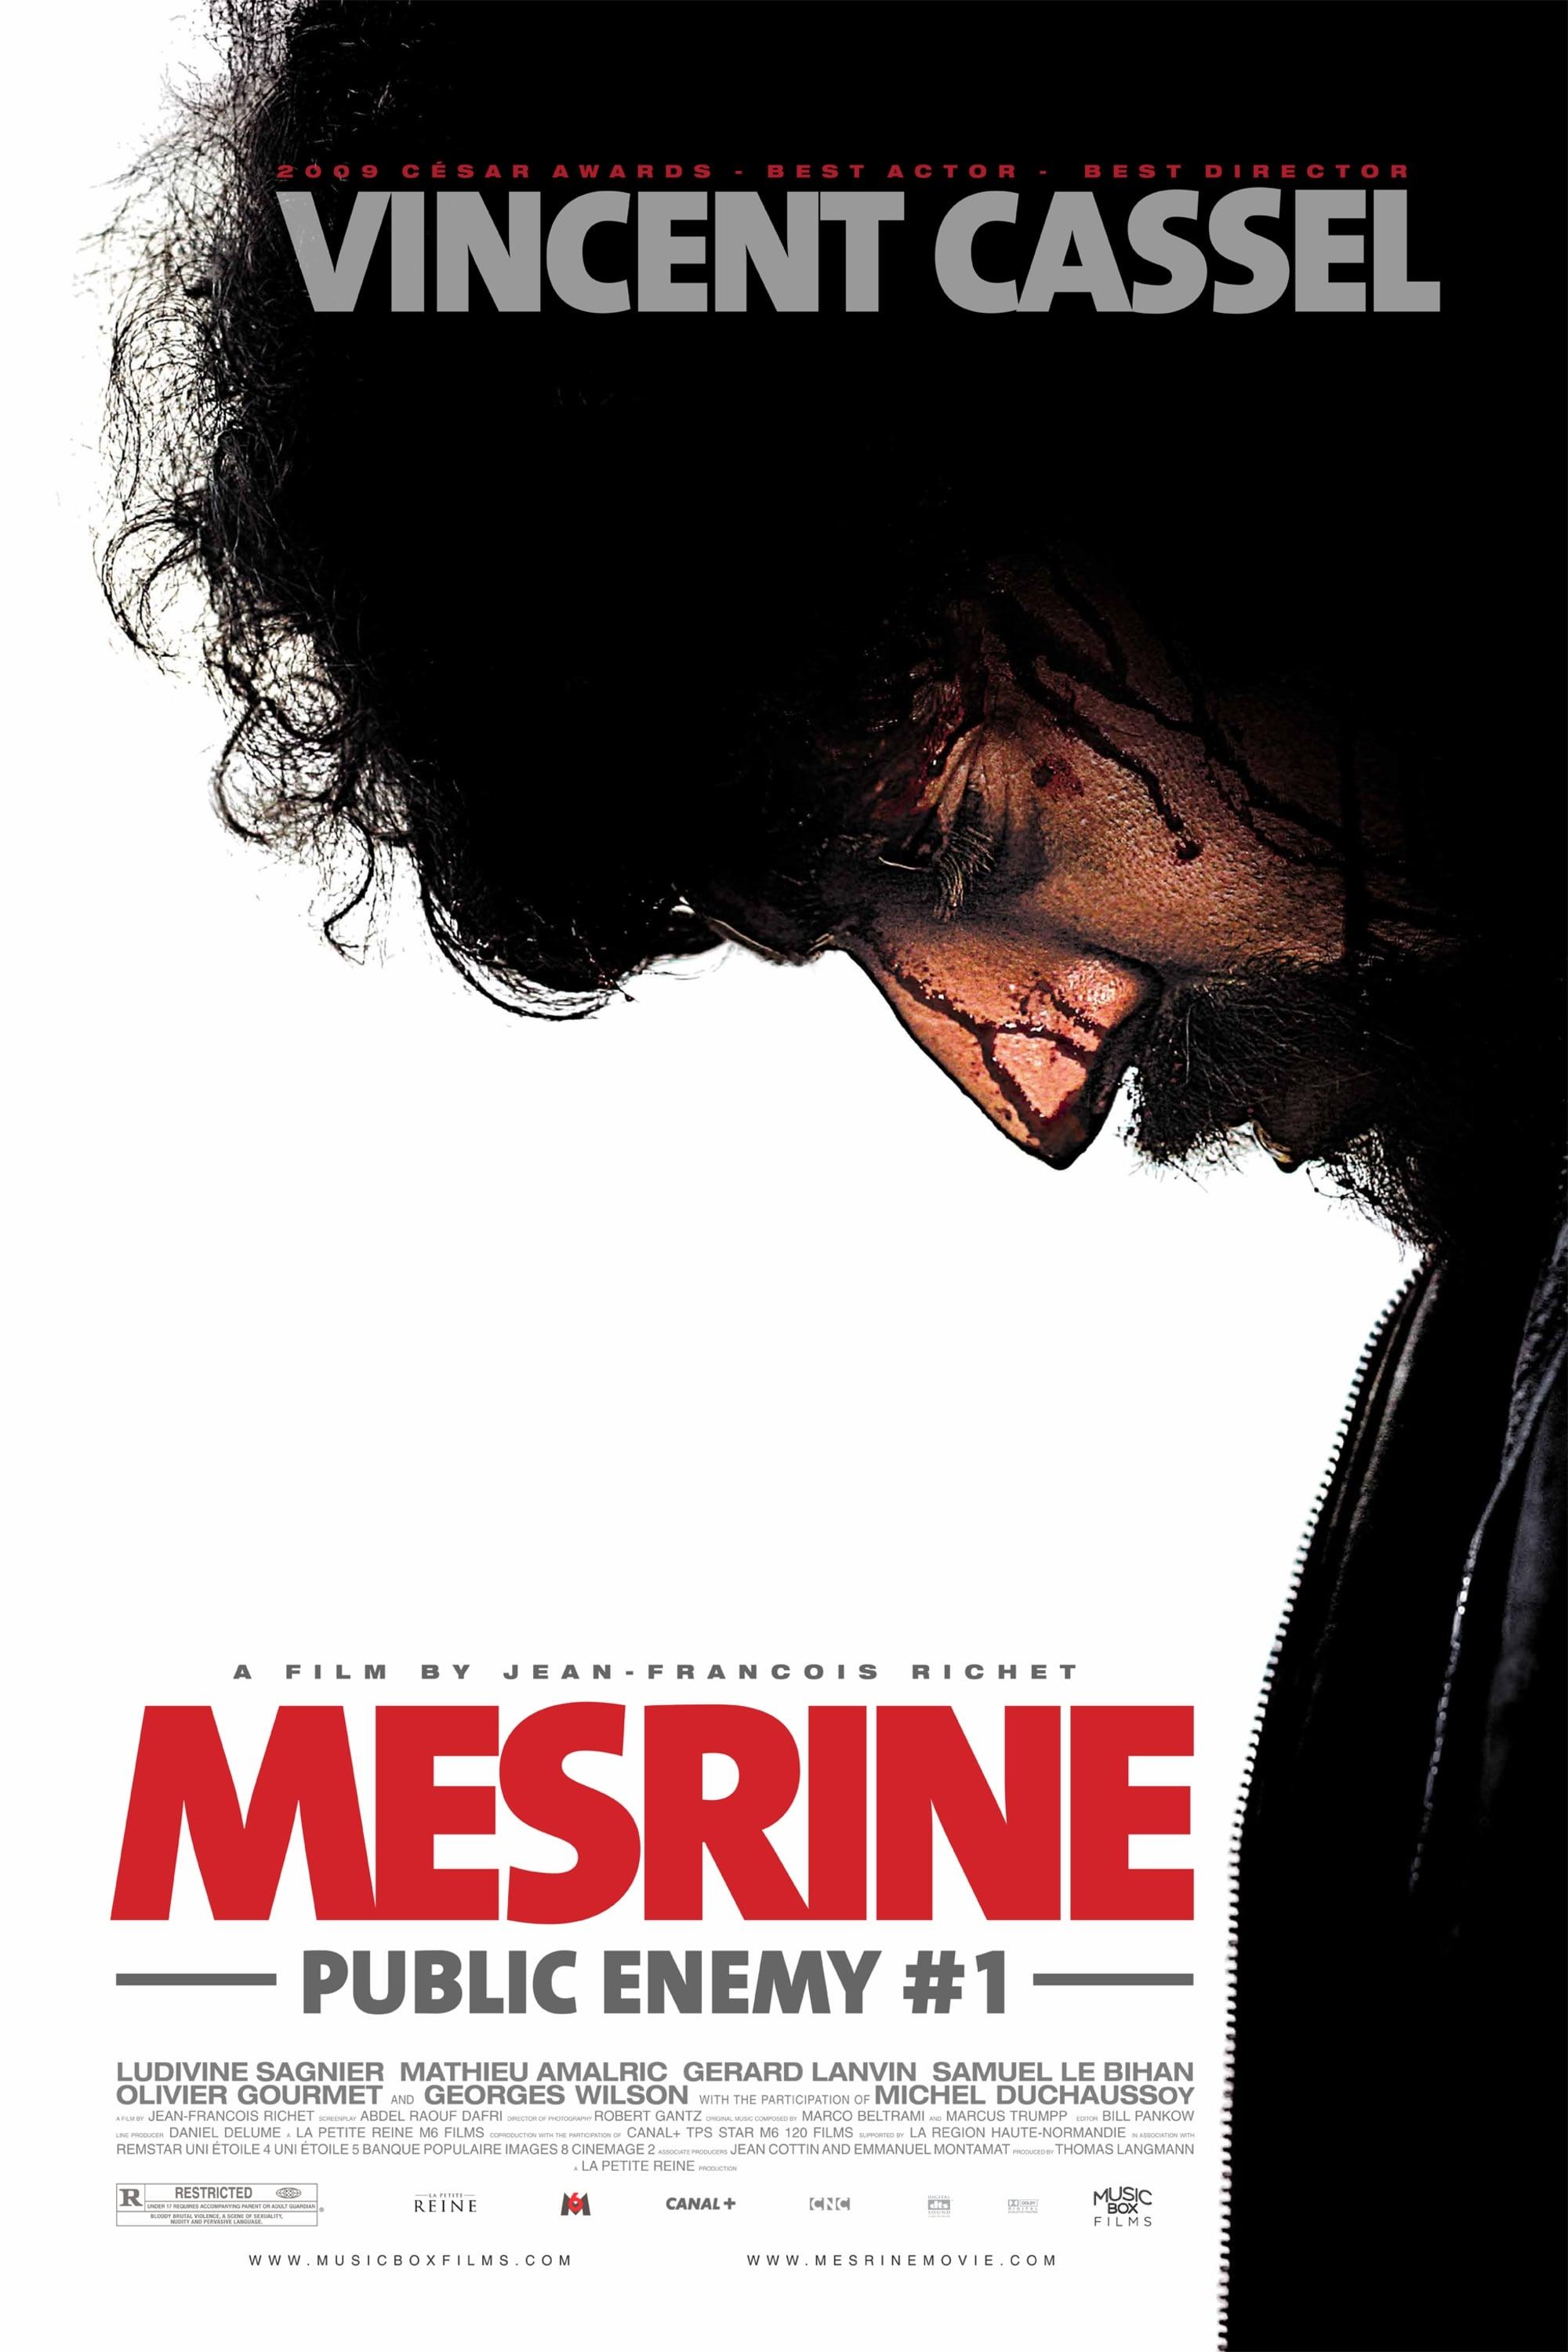 Mesrine: Public Enemy #1 poster